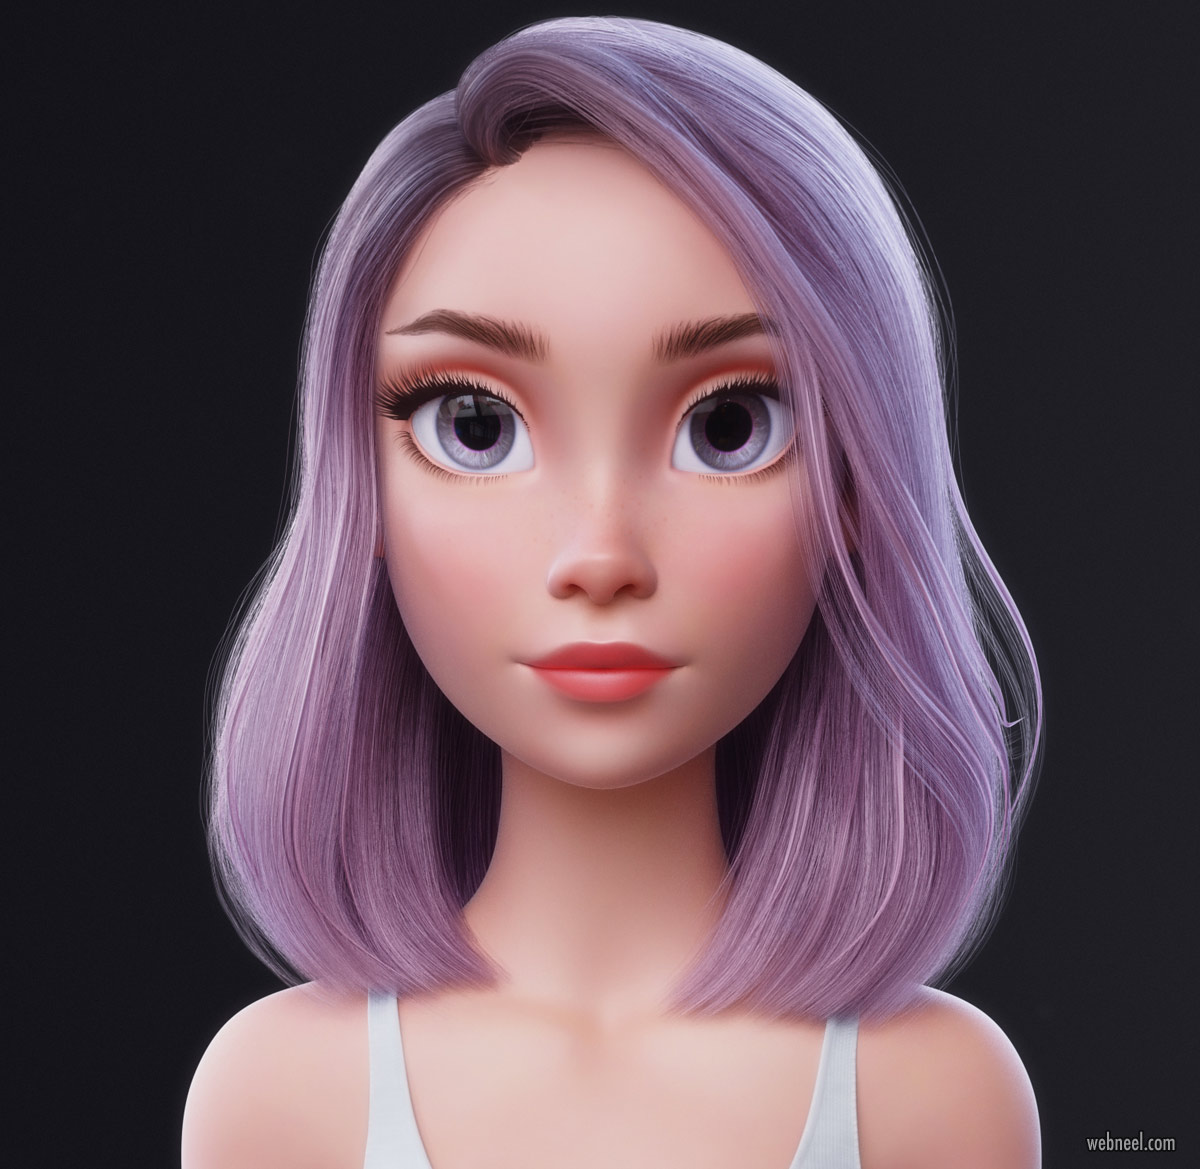 3d blender model girl by nazar noschenko